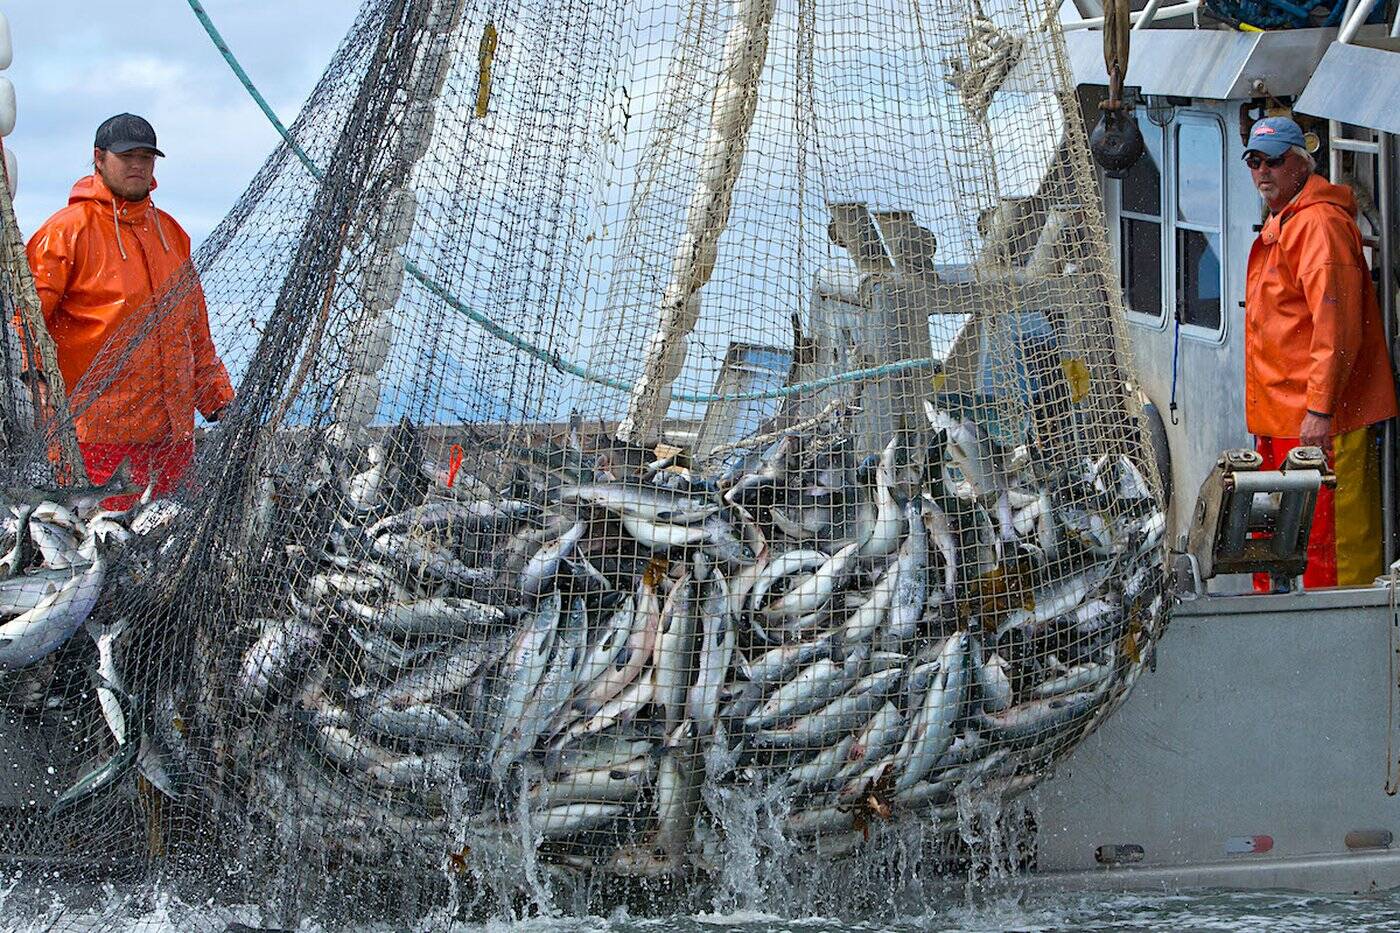 Alaskan commercial fishery 'plundering' threatened B.C. salmon - Yukon News